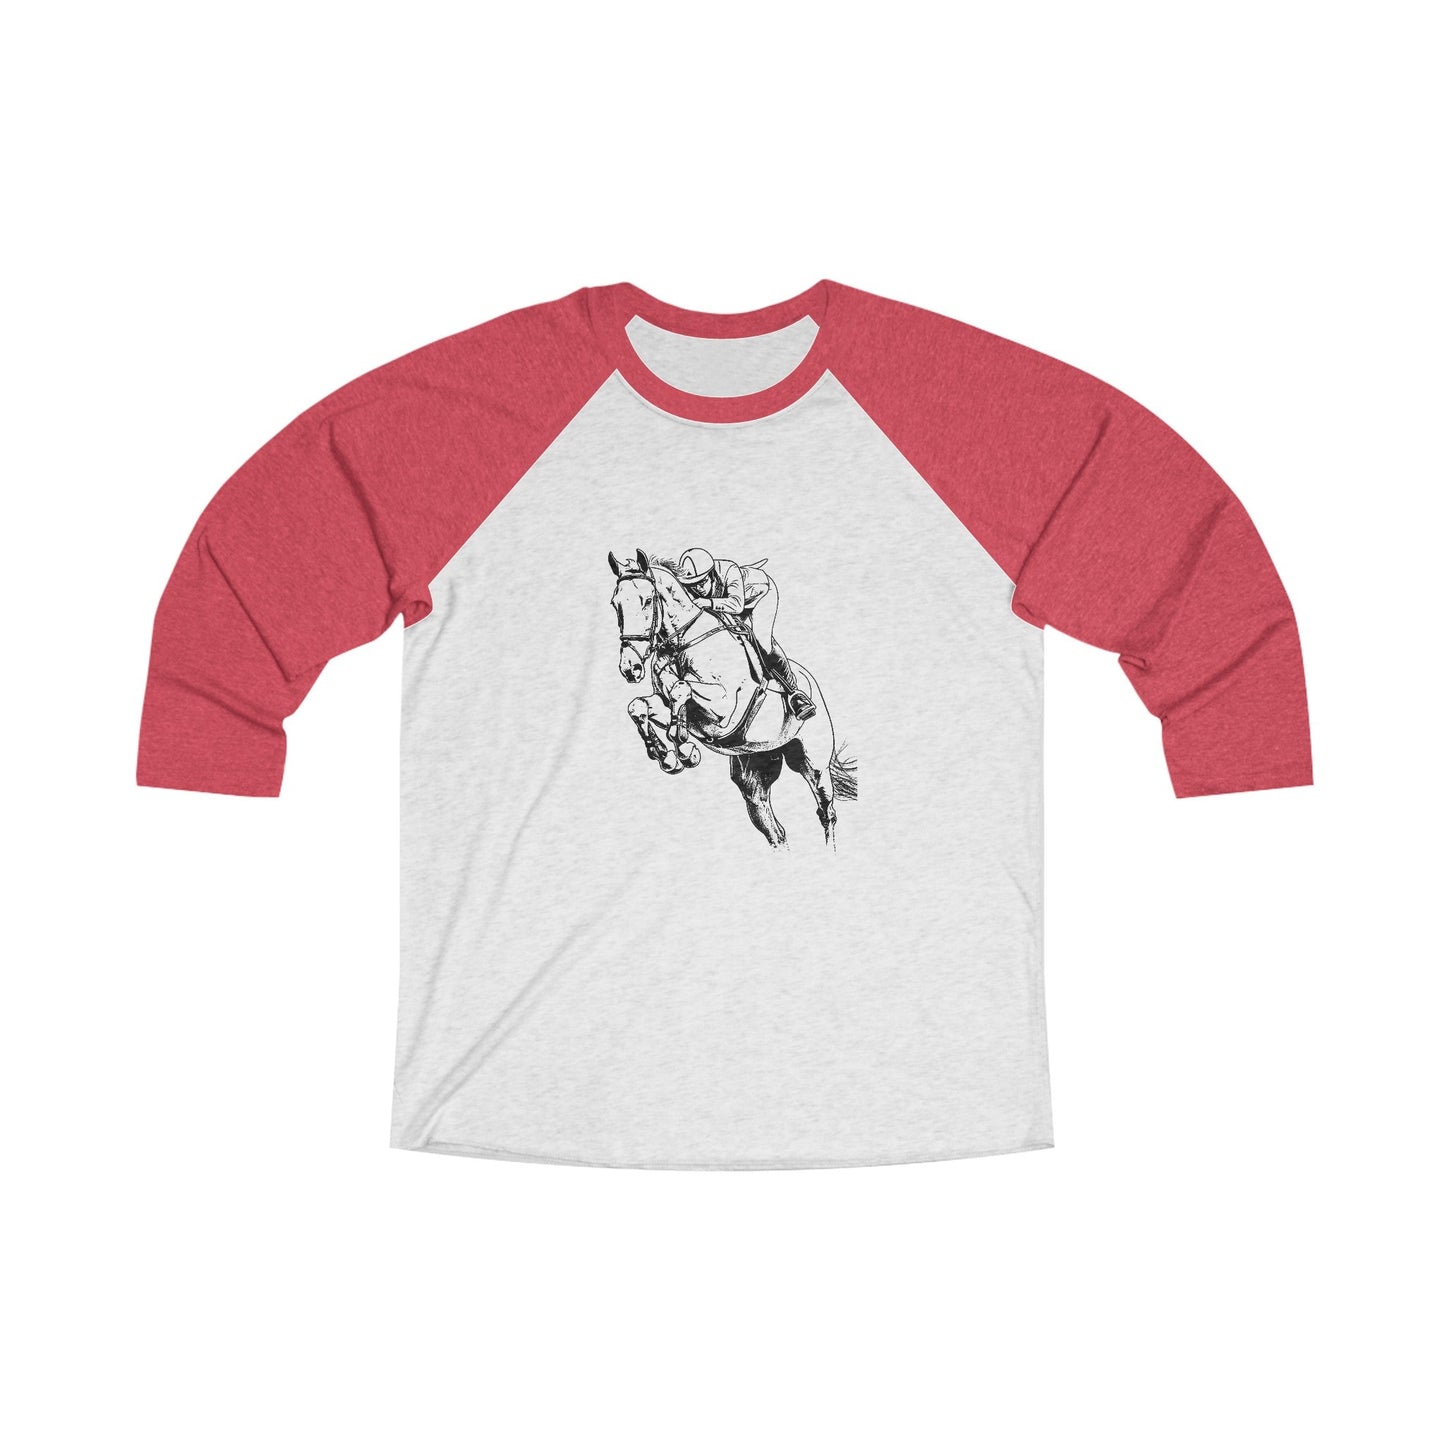 Equestrian Hunter Jumper Ragland T-shirt, Two color Baseball Shirt, Equestrian Horse Shirt, Equestrian Gift, Show Jumping, HorseLover Shirt - FlooredByArt